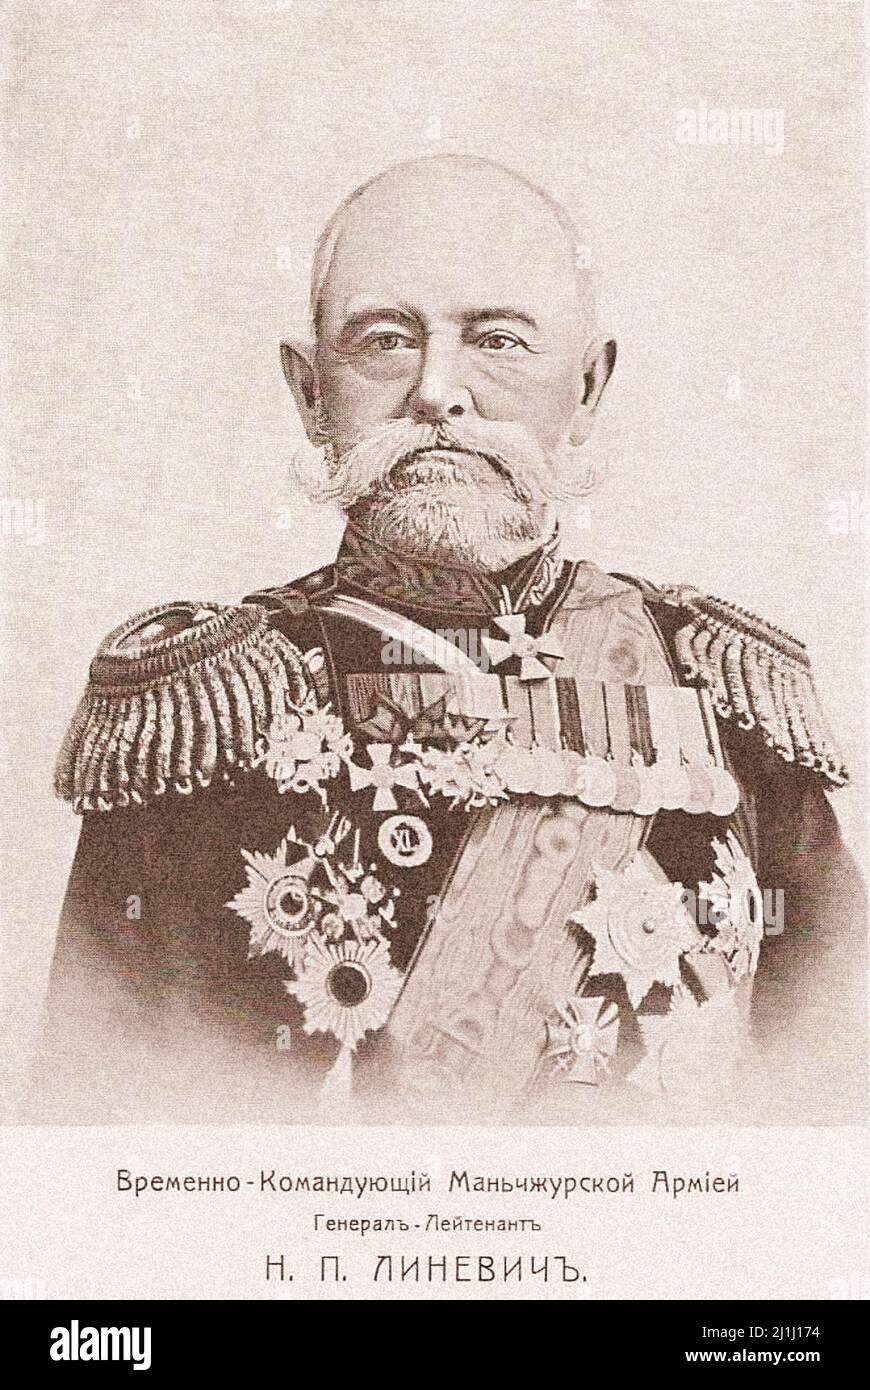 Николай Петрович Охотников |